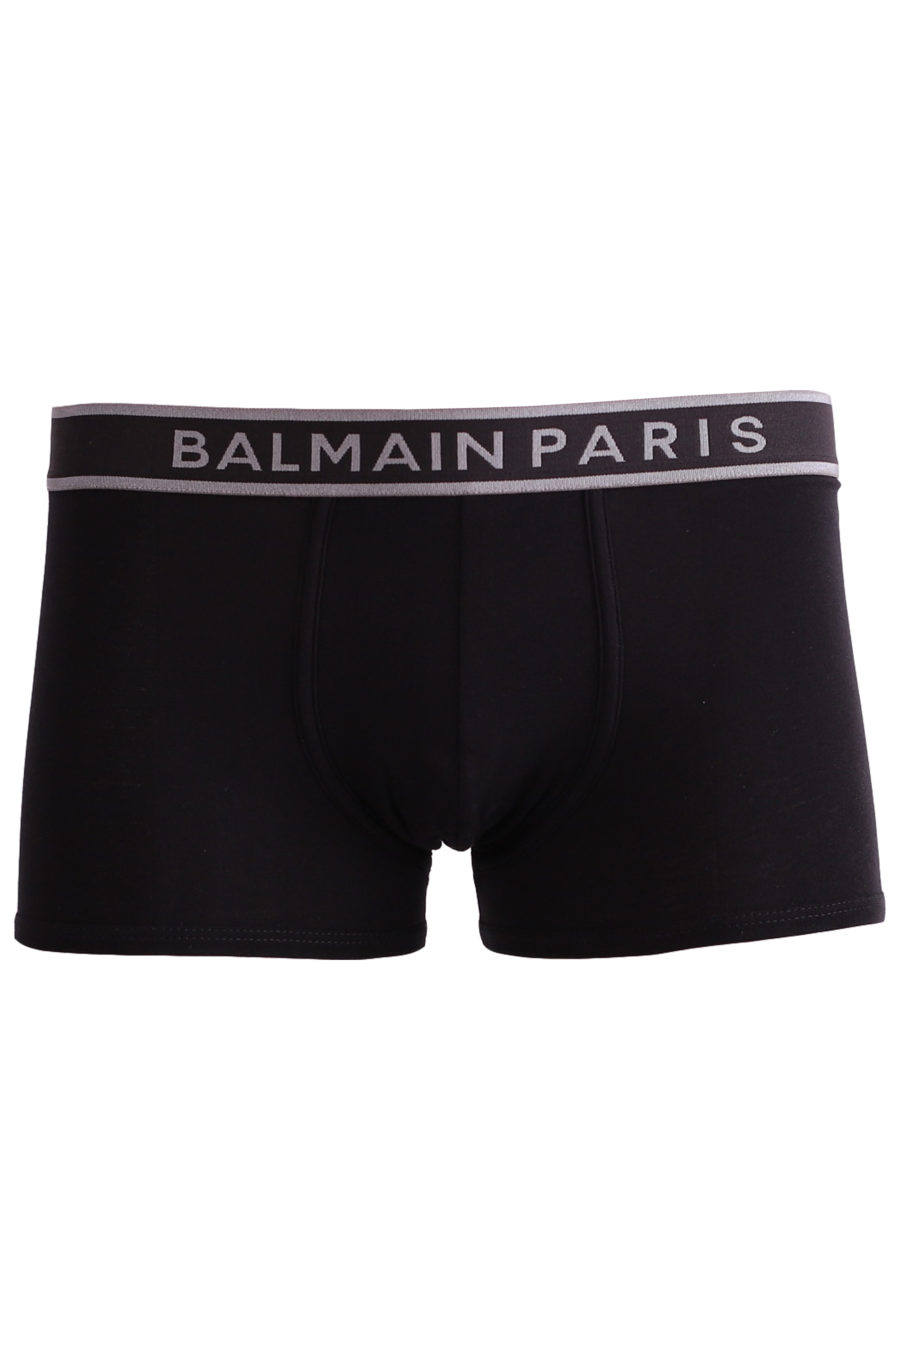 Black boxer shorts with silver logo on waistband - 01b96cafd2fd500599c874b466a3b980a6cfbdc6